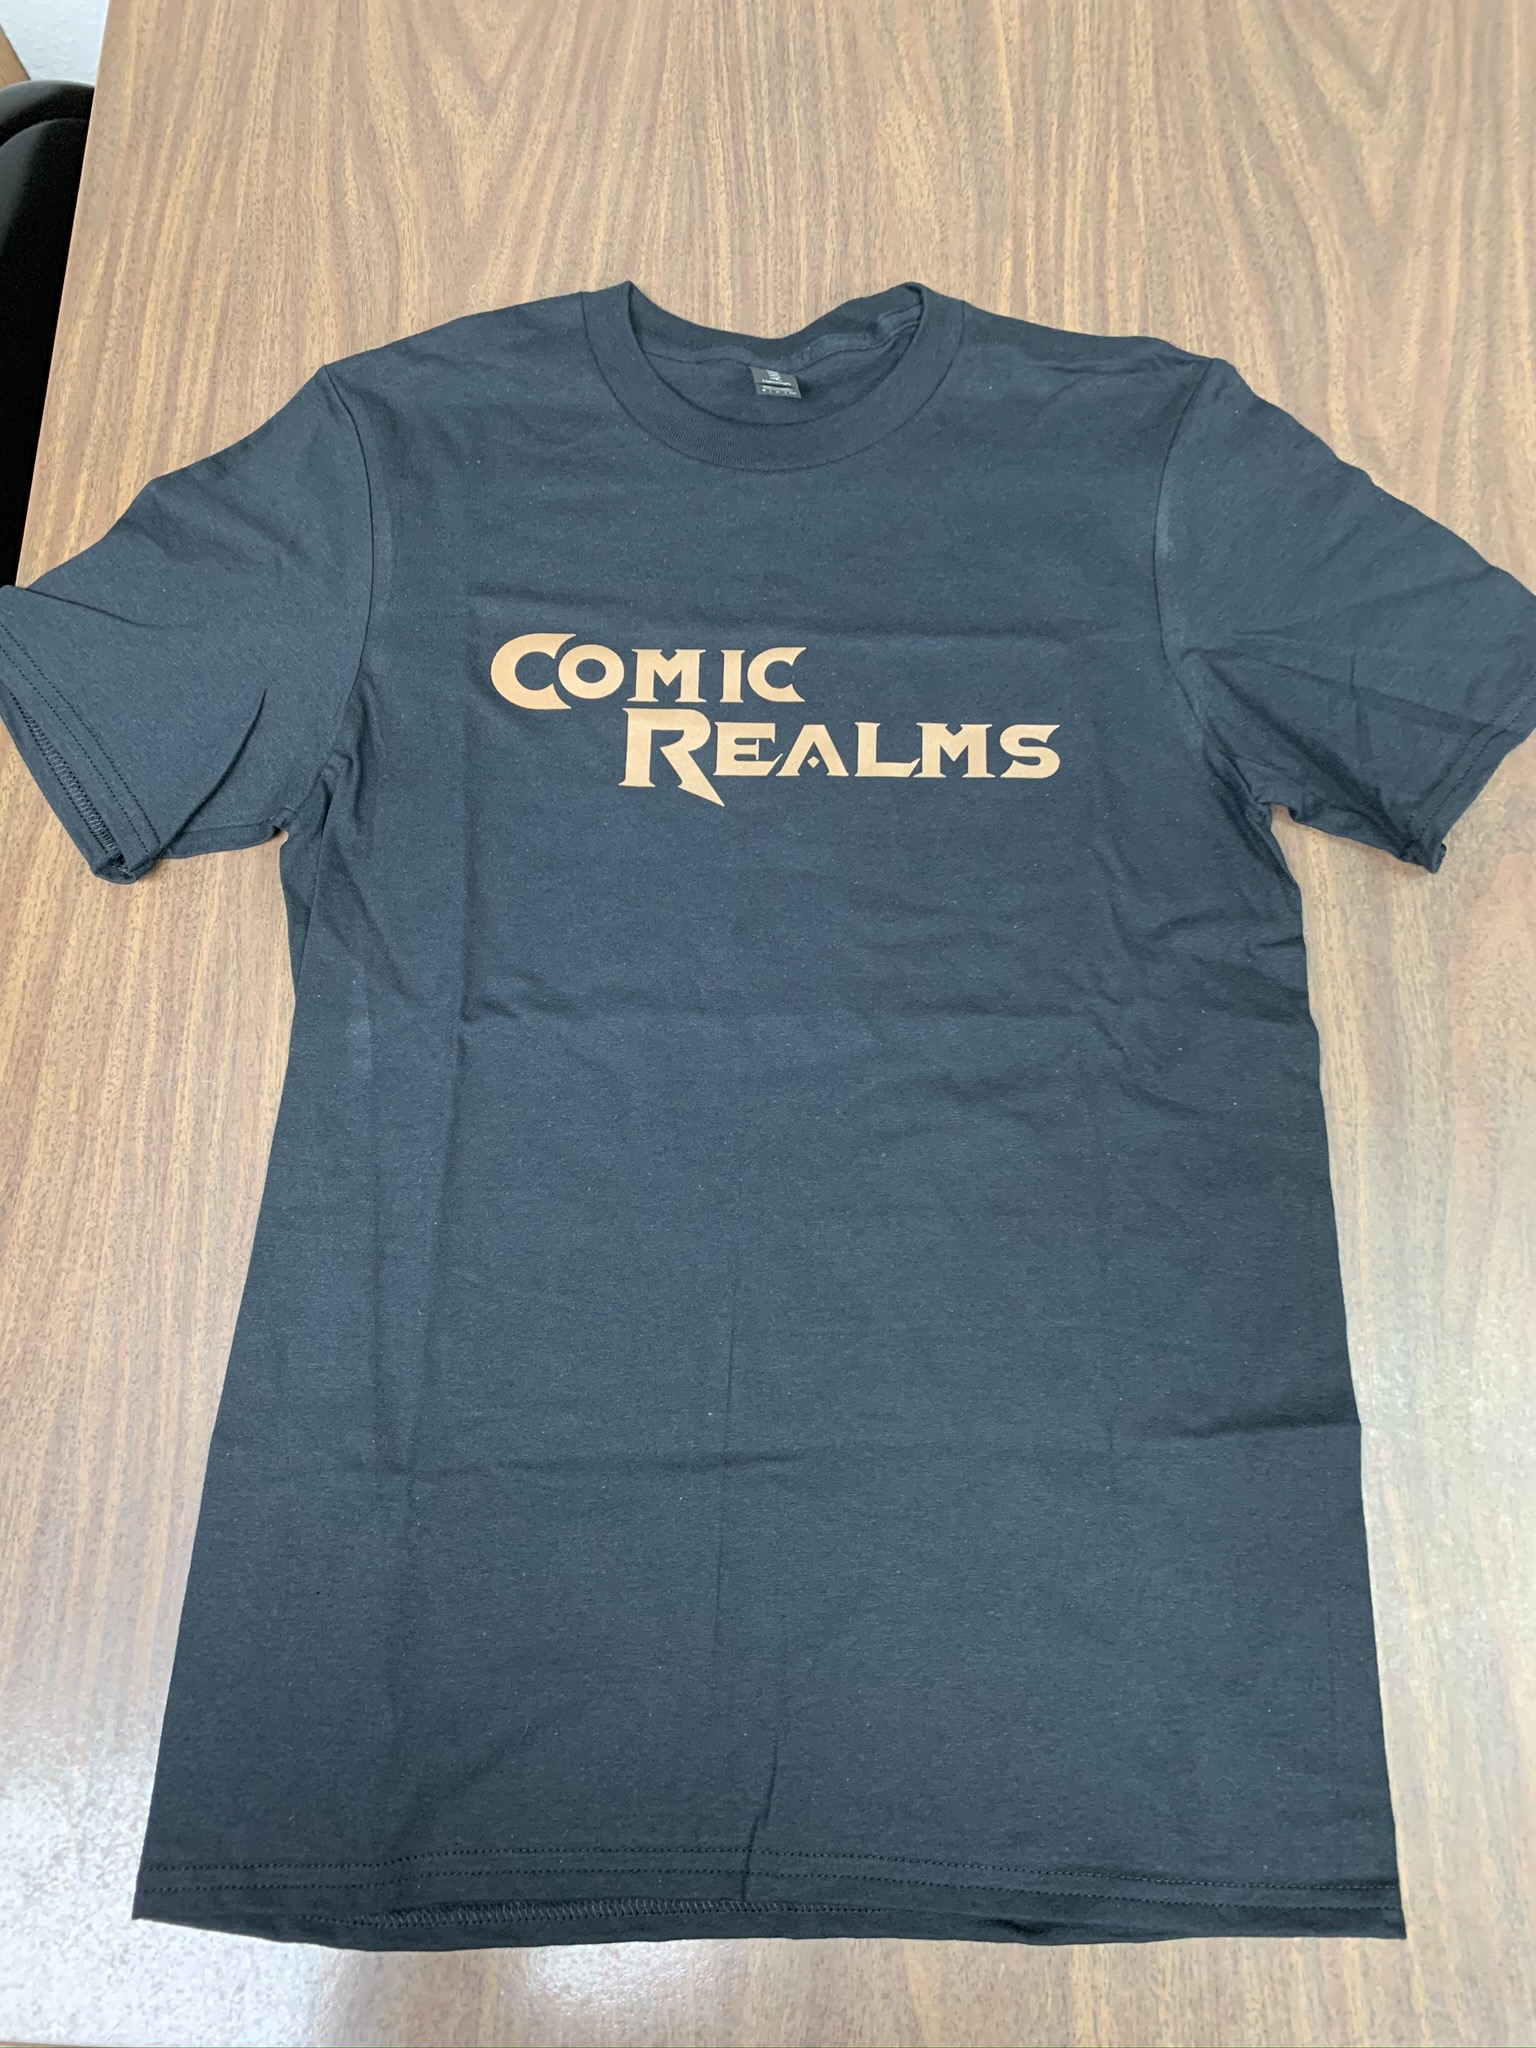 Comic Realms T-Shirt Large Black/Copper